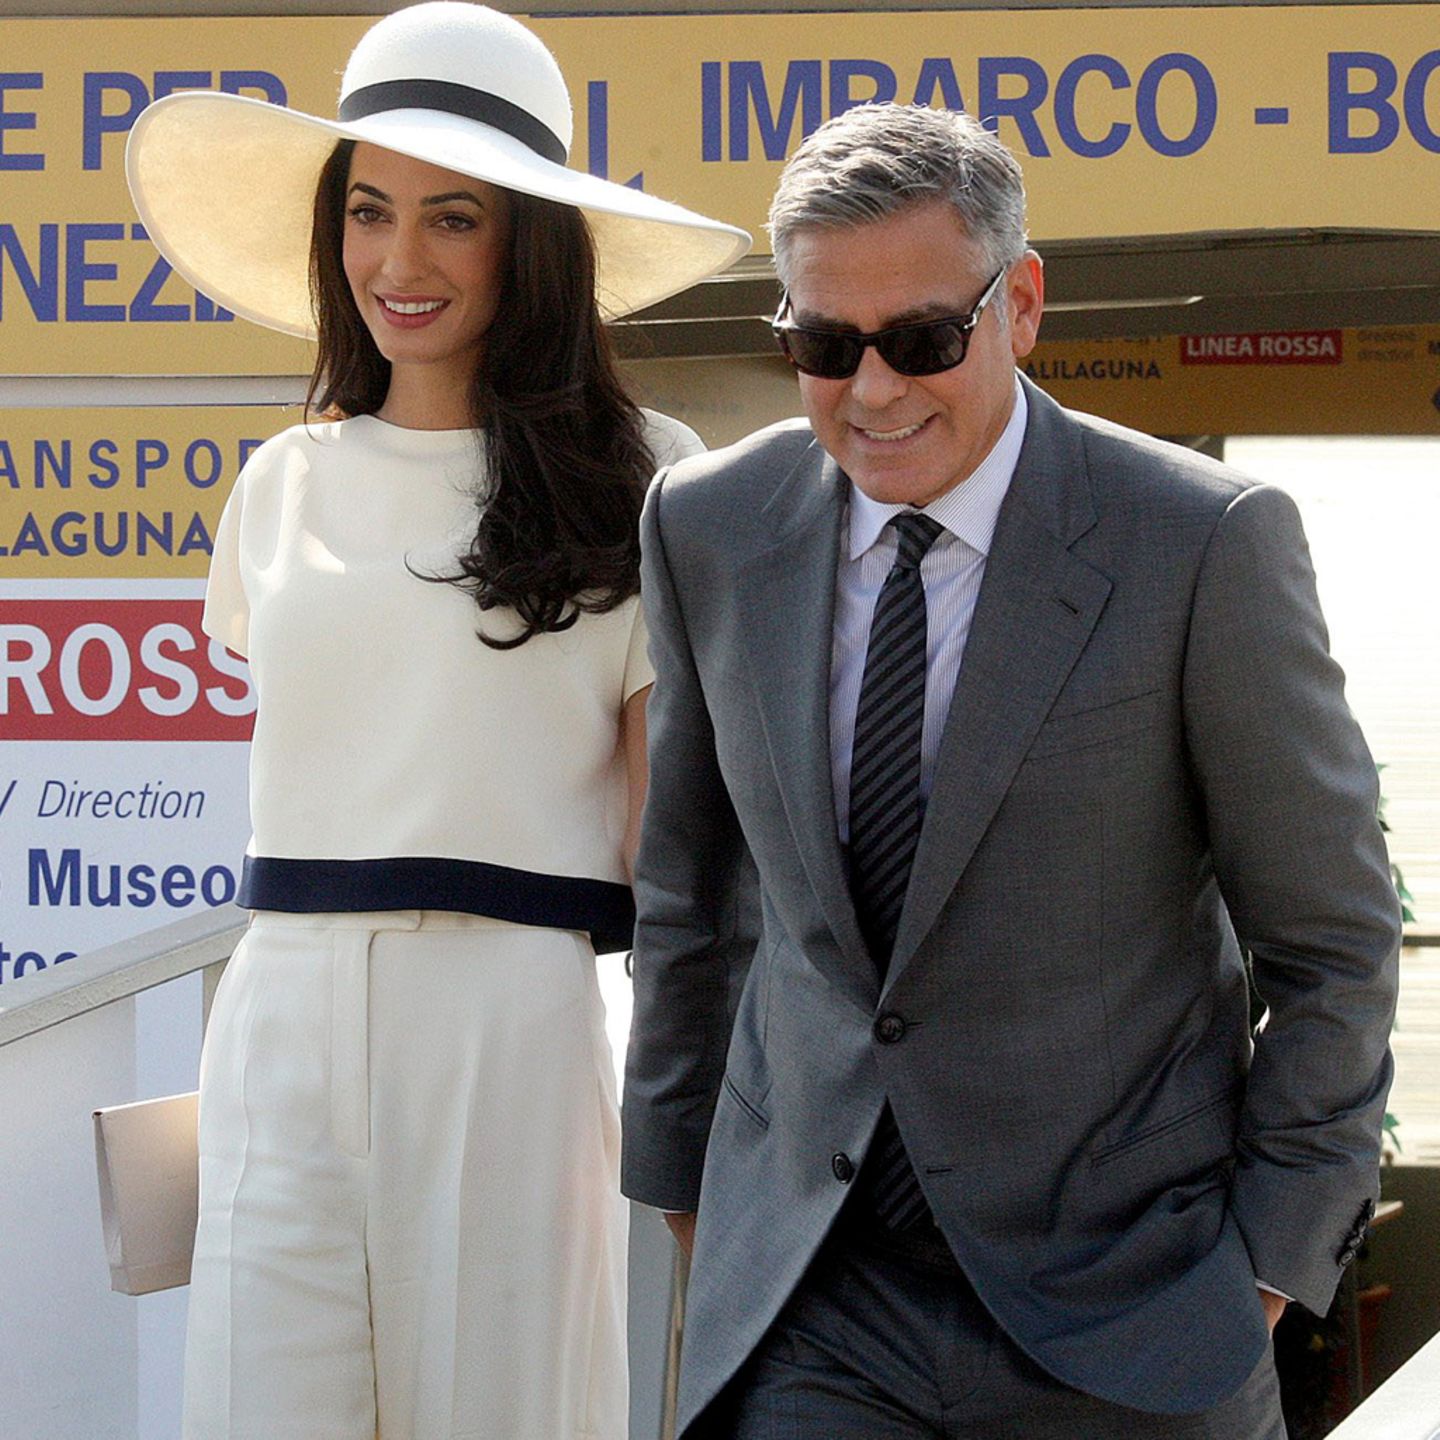 George Clooney + Amal Alamuddin